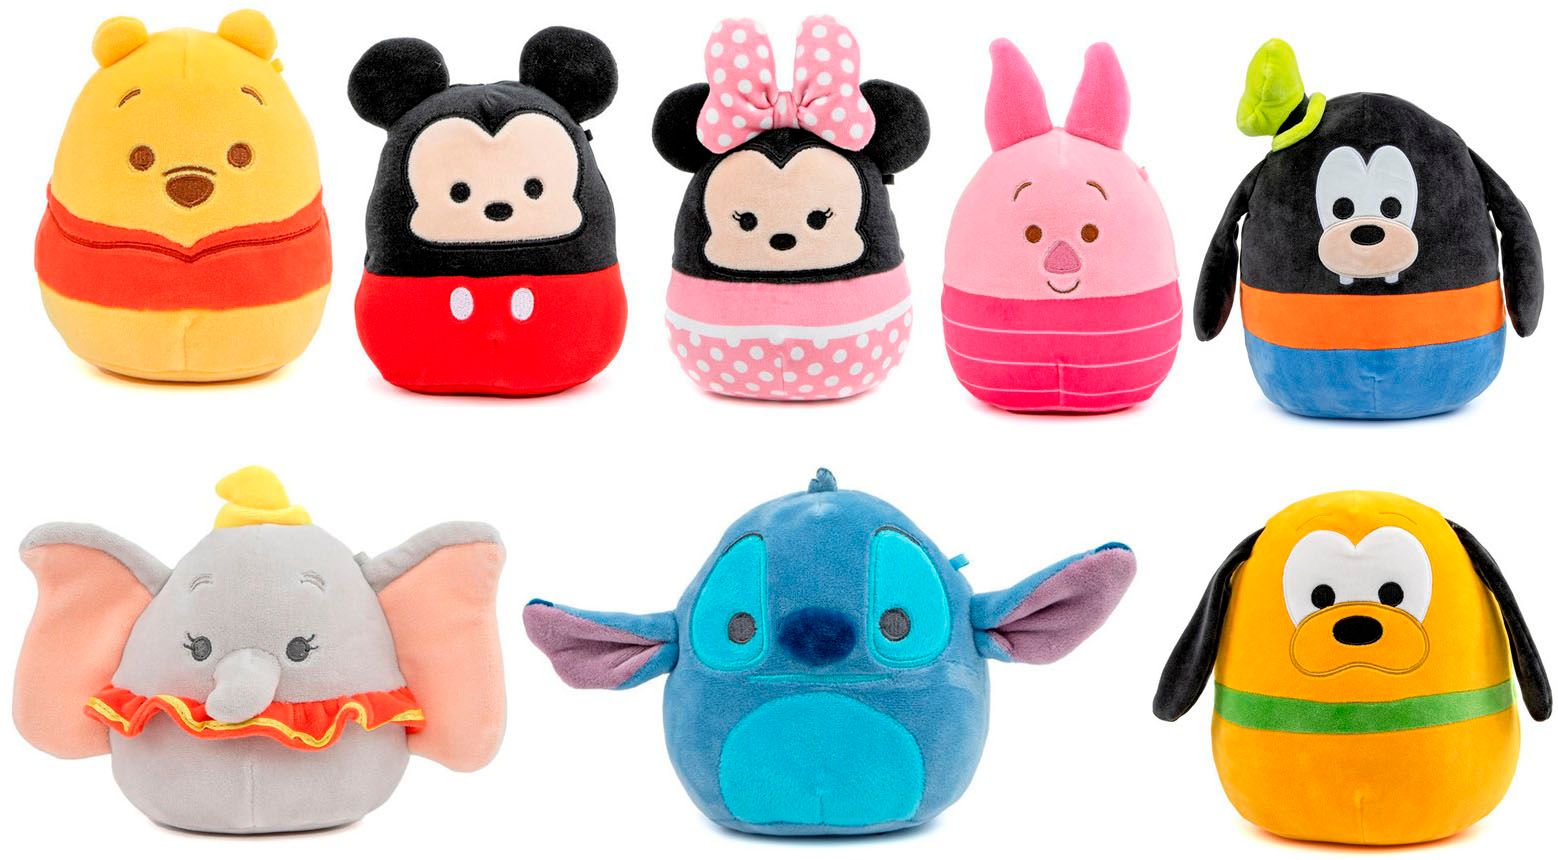 Disney Stitch Small Plush Assortment